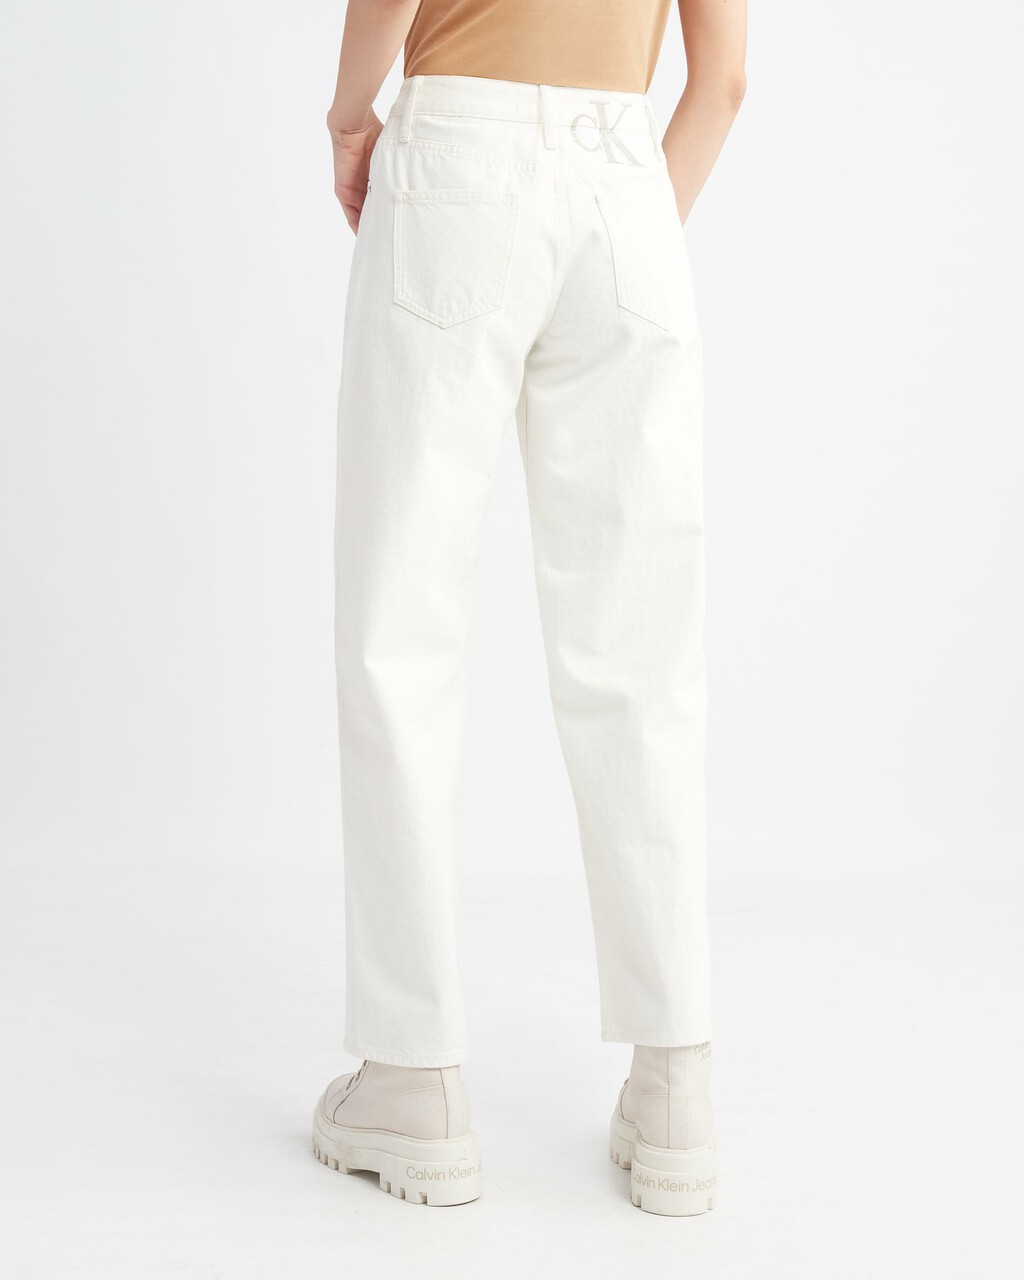 90 年代直筒MODERN NEUTRALS 白色牛仔褲, Neutral Back Embro, hi-res